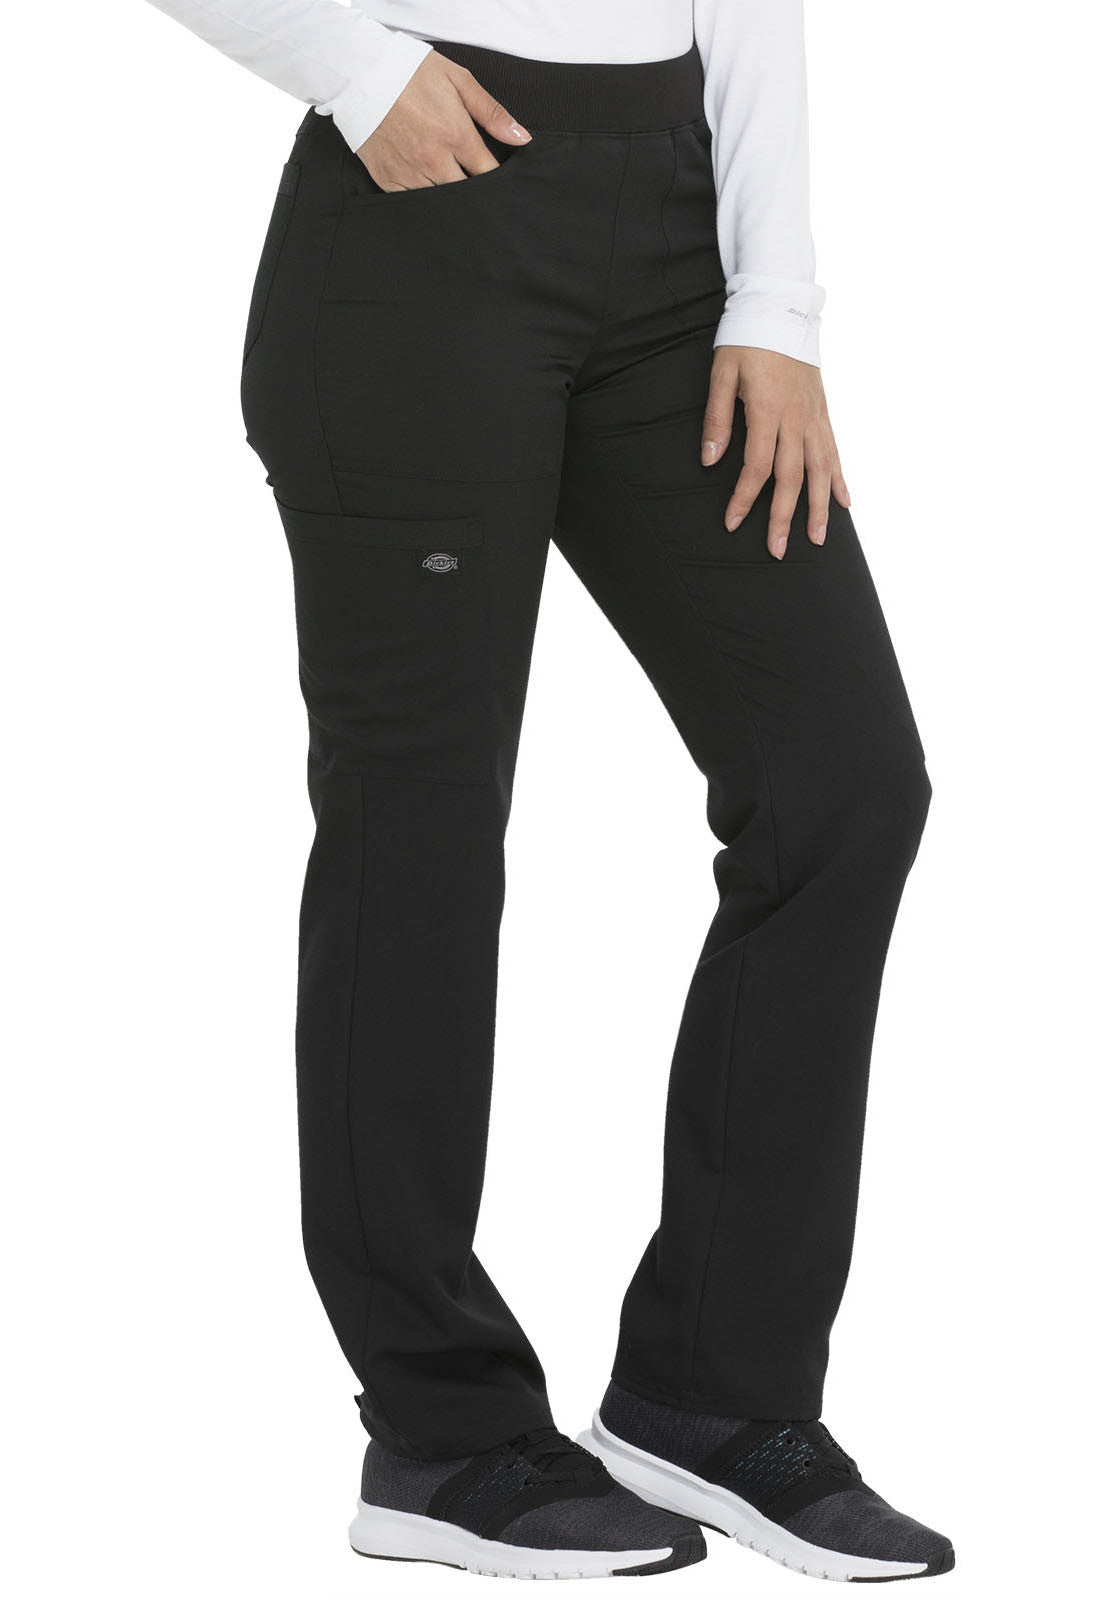 Brest - Pantalon slim - Taille moyenne - Femme - Dickies Dickies